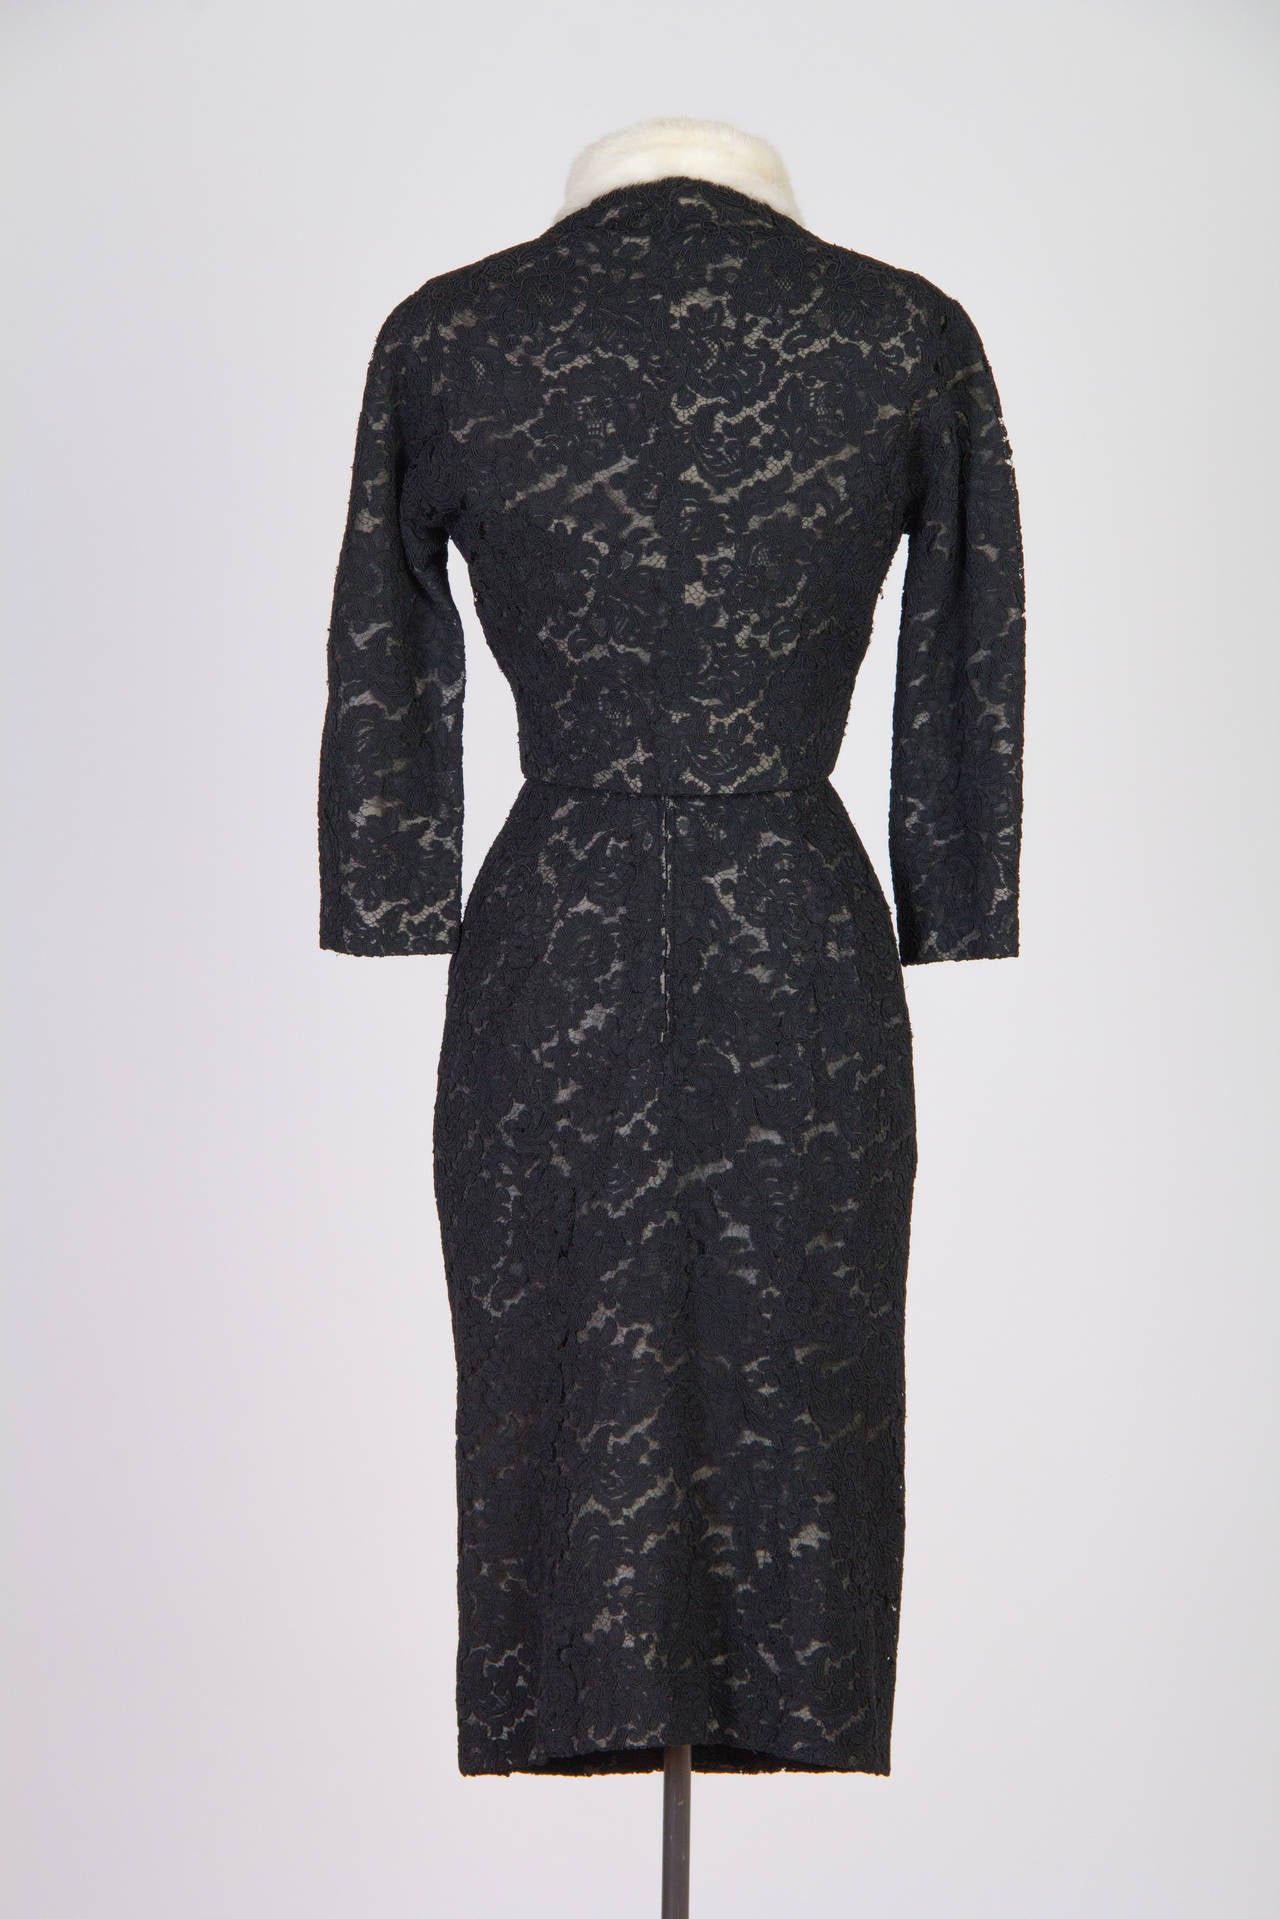 1950S PIERRE BALMAIN Black & White Haute Couture Silk Lace Cocktail Dress Jacket With Mink Collar